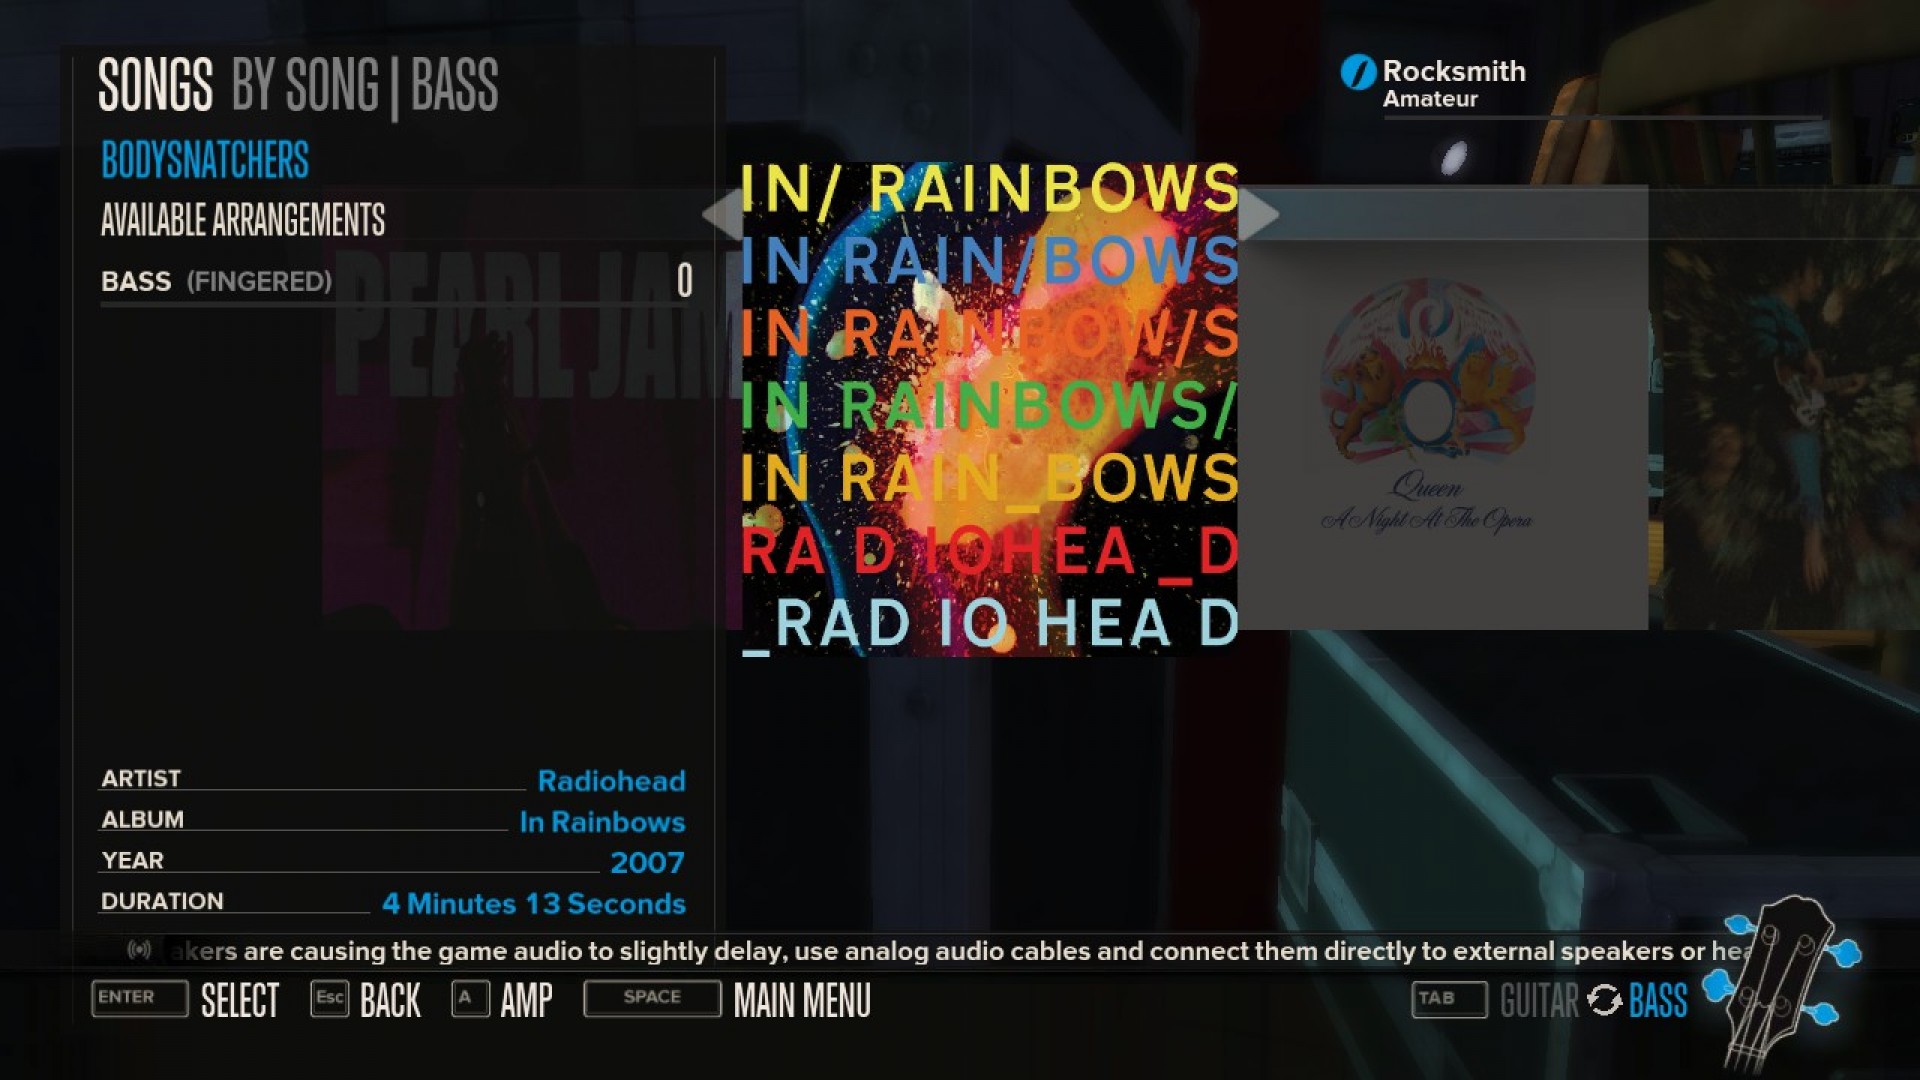 Rocksmith - Radiohead - Bodysnatchers screenshot